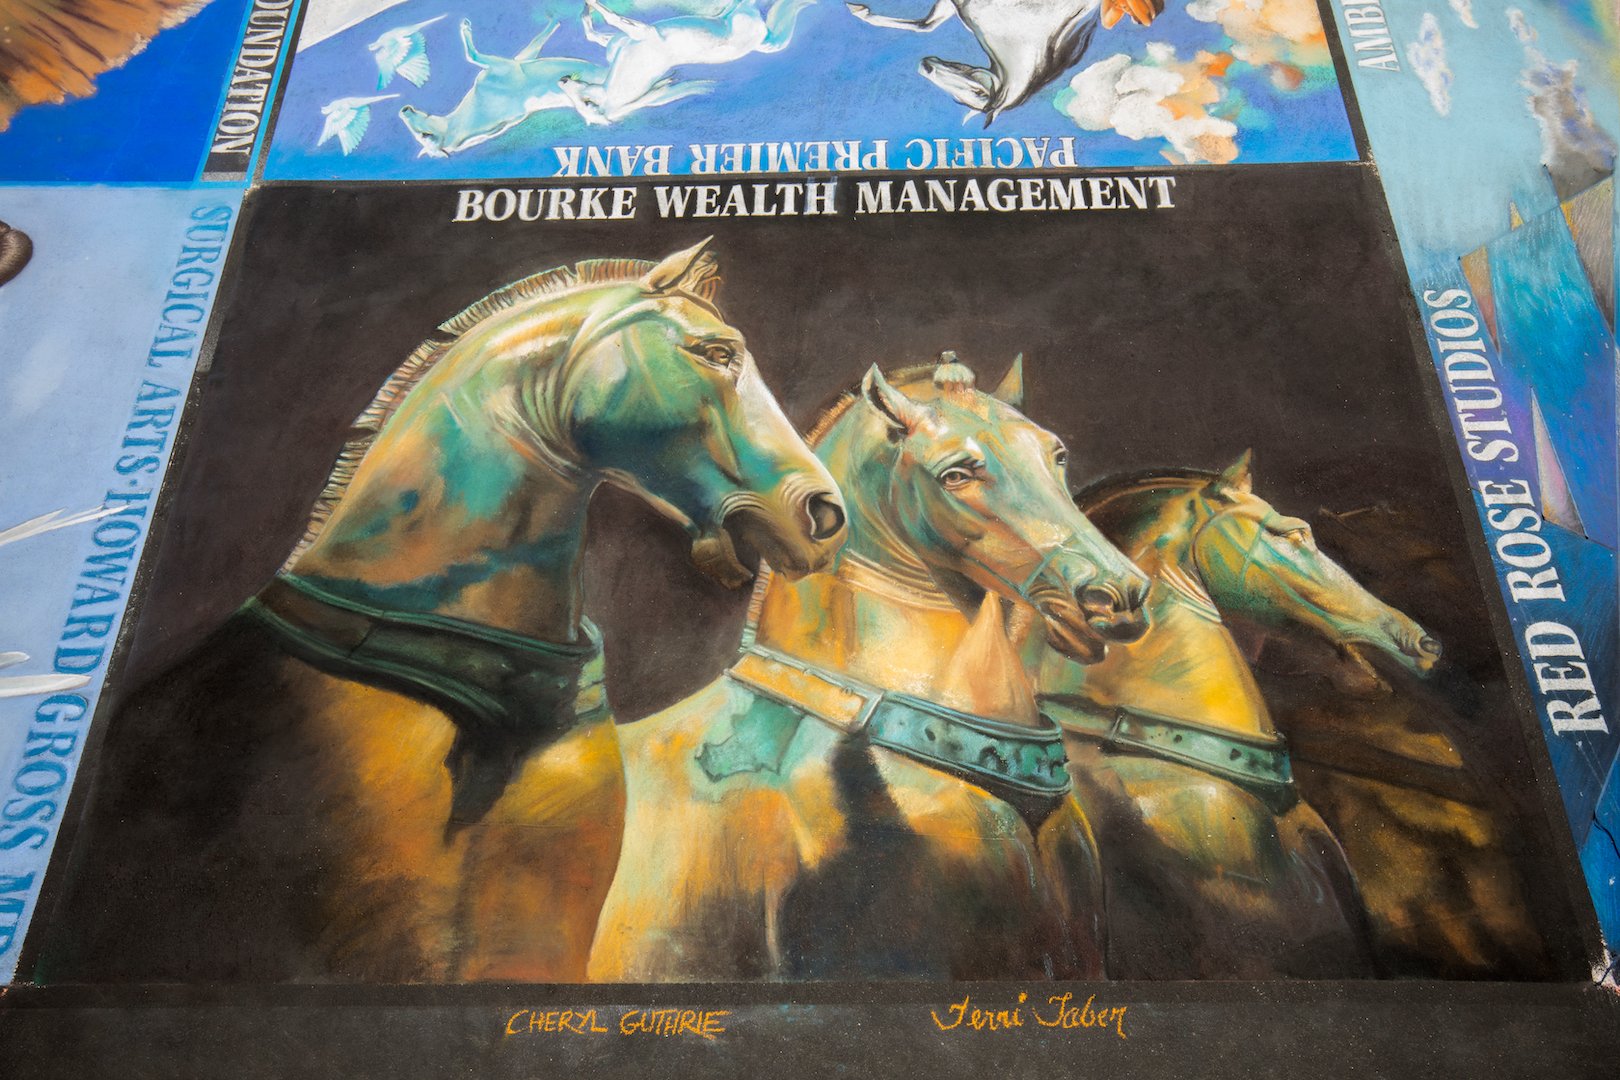  Bourke Wealth Management  Artists:  Cheryl Guthrie and Terri Taber 